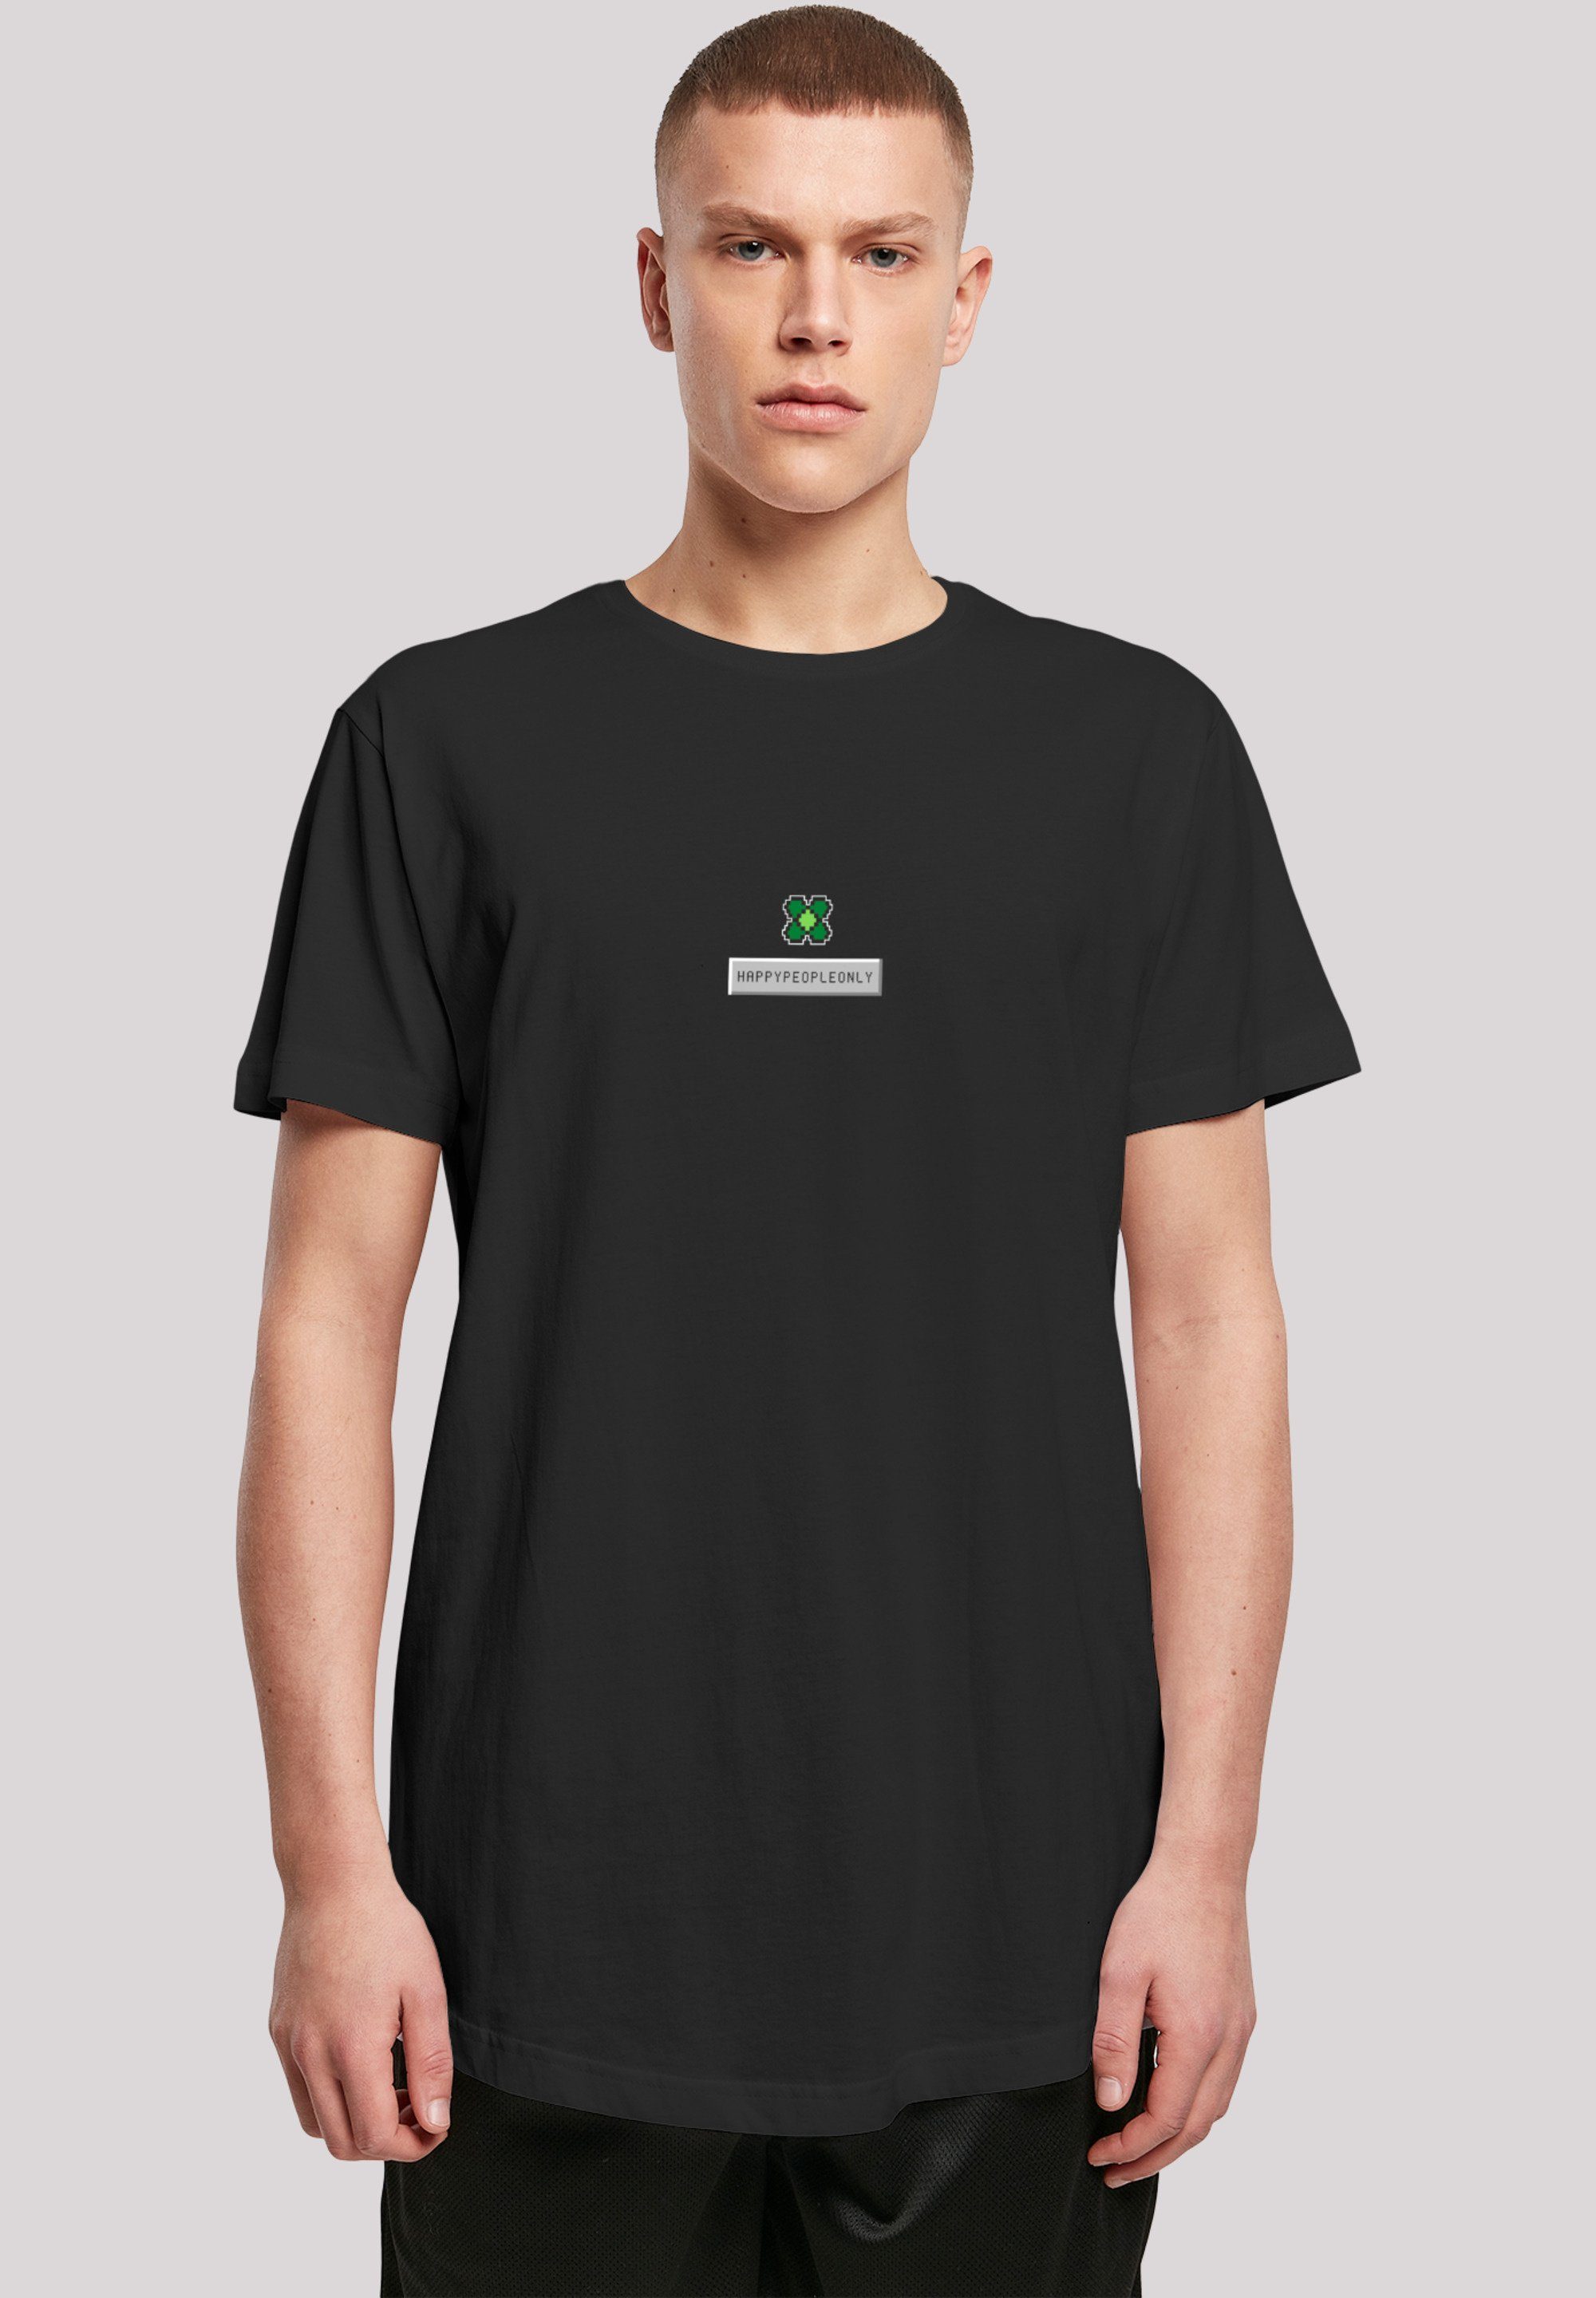 New Pixel schwarz T-Shirt Print Happy F4NT4STIC Year Kleeblatt Silvester